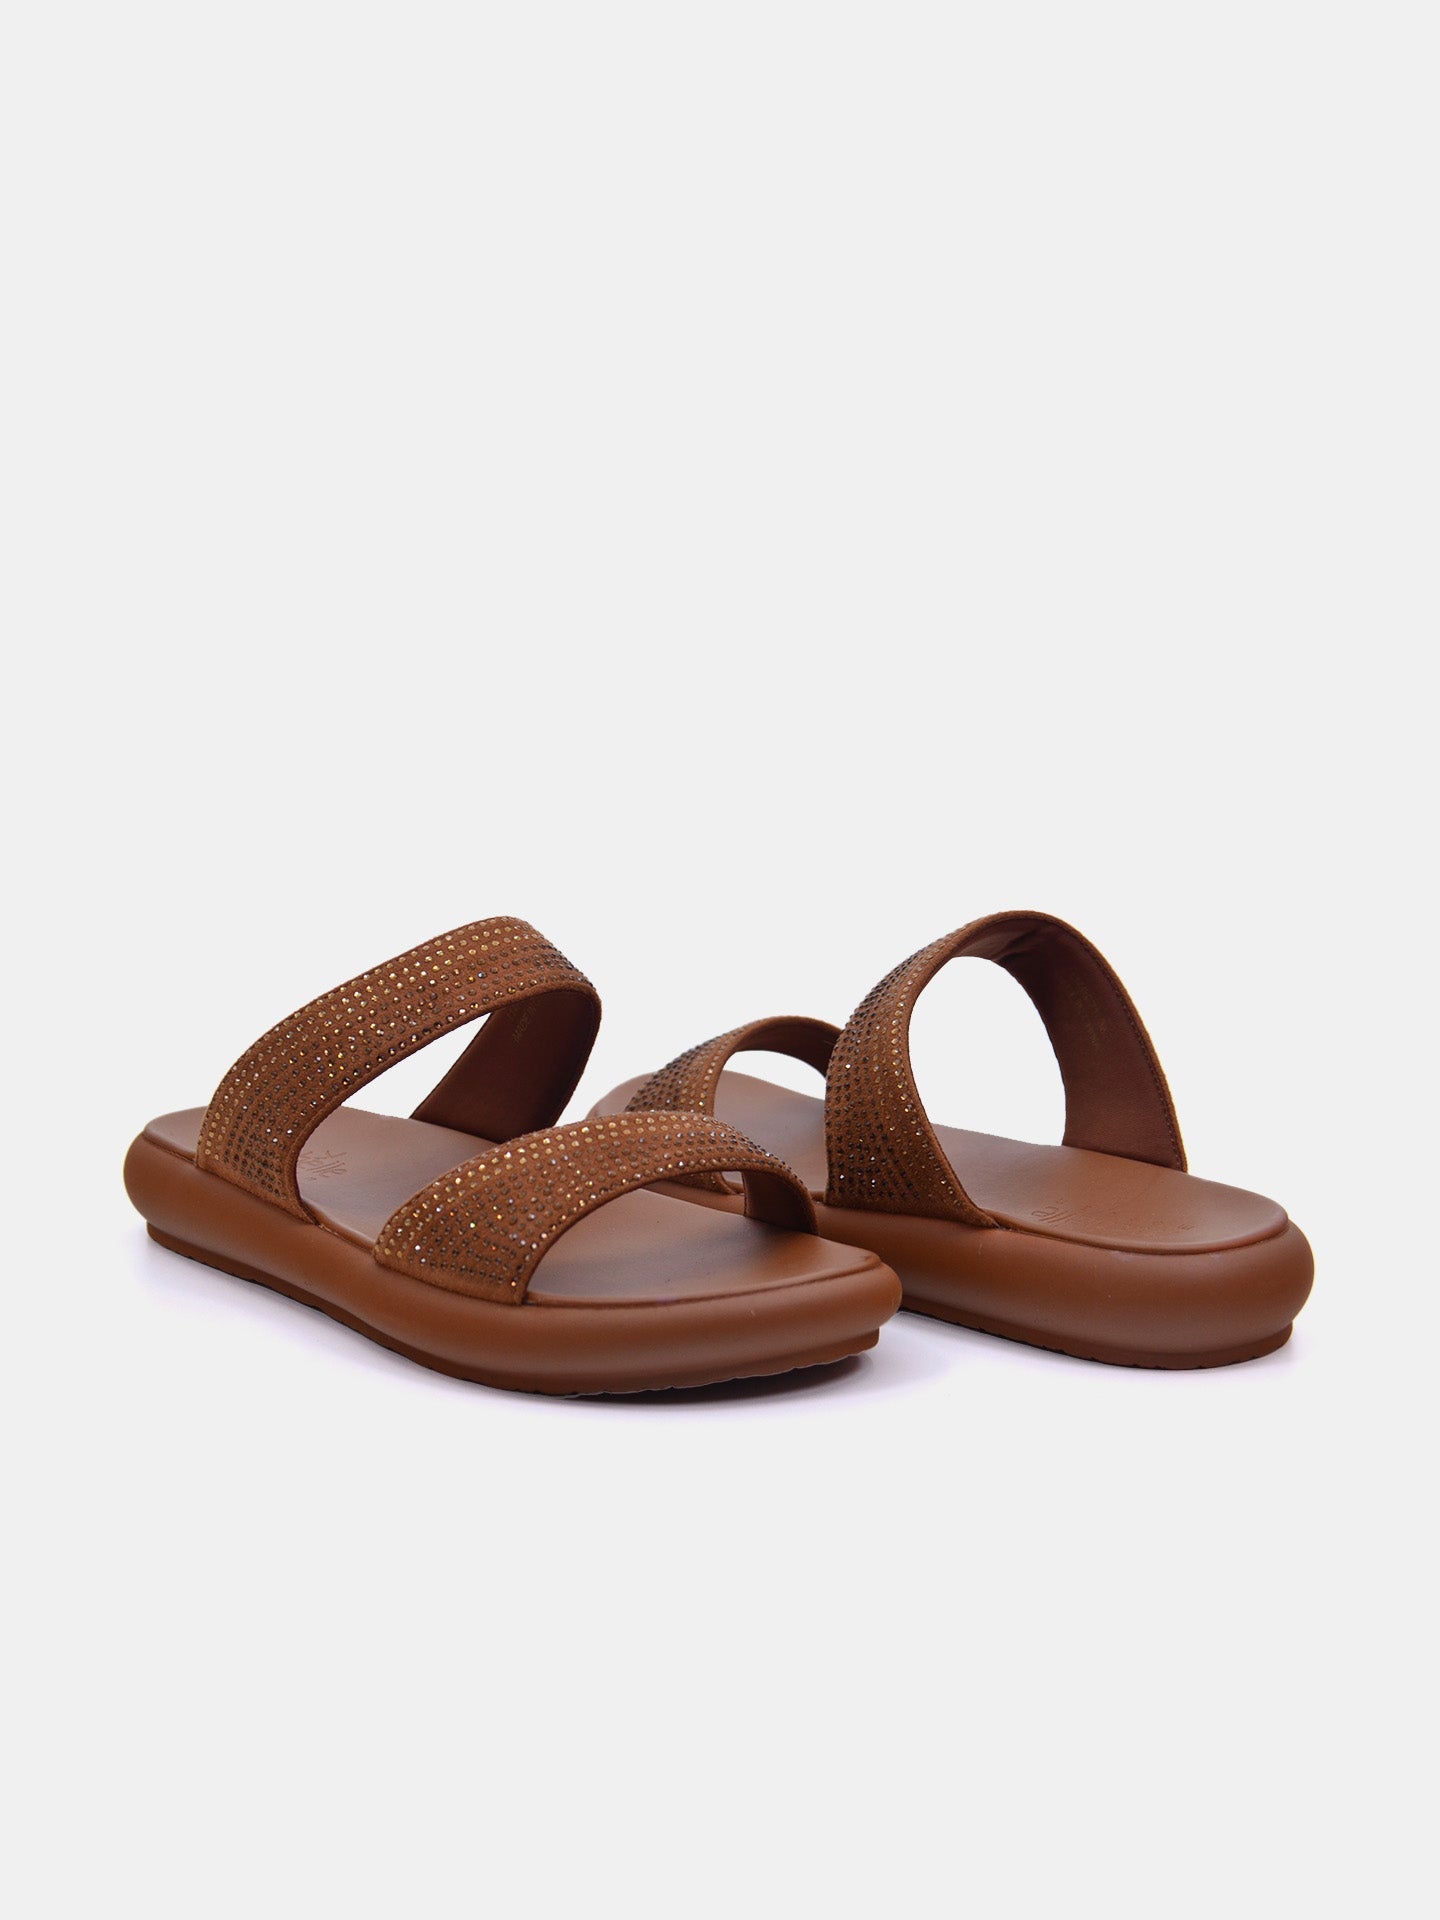 Michelle Morgan 114RC71I Women's Flat Sandals #color_Brown